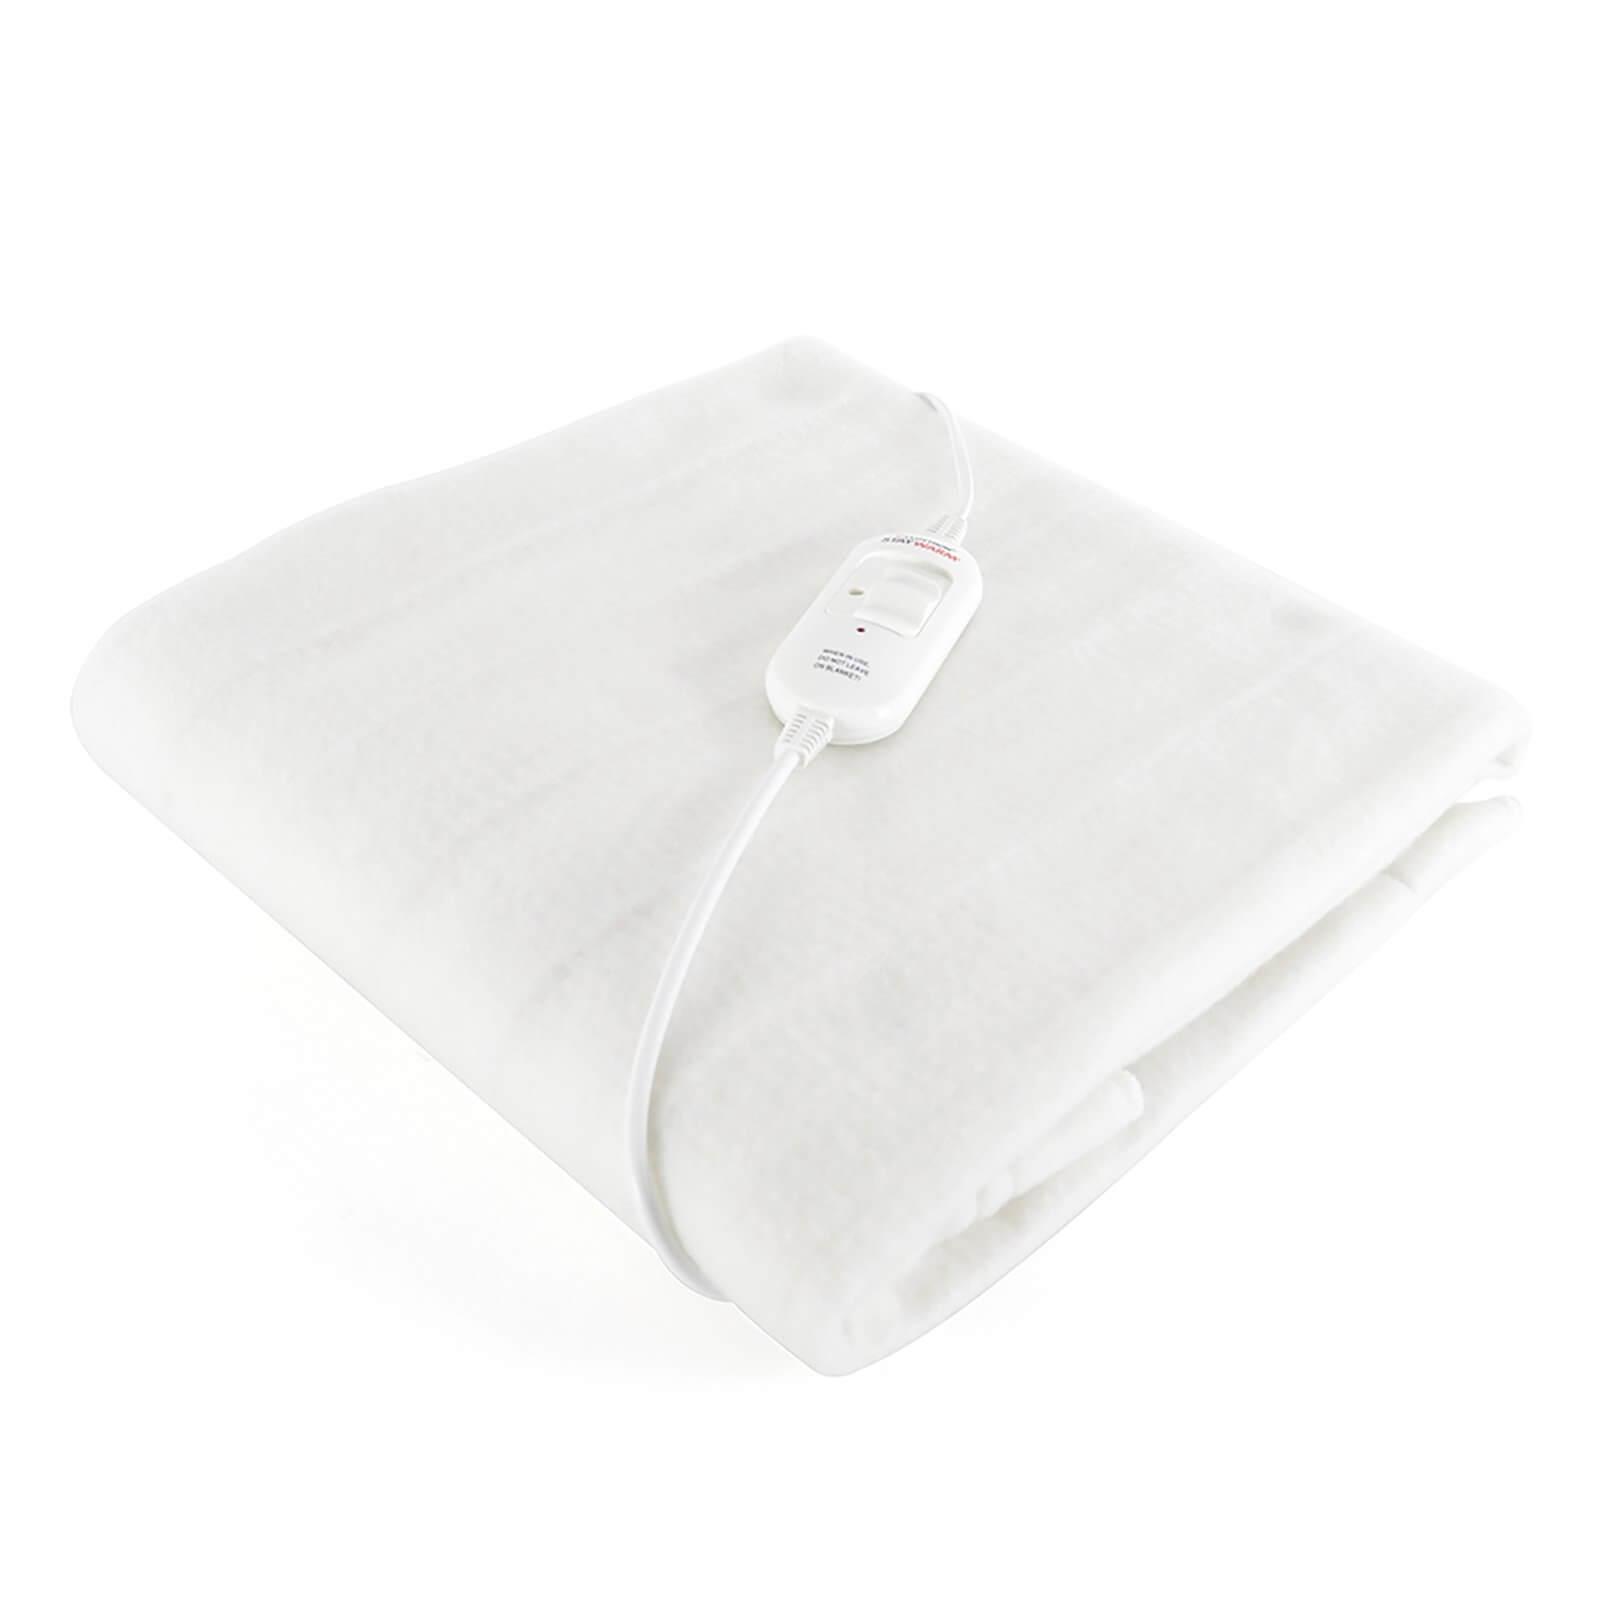 StayWarm Luxury Electric Blanket - Double